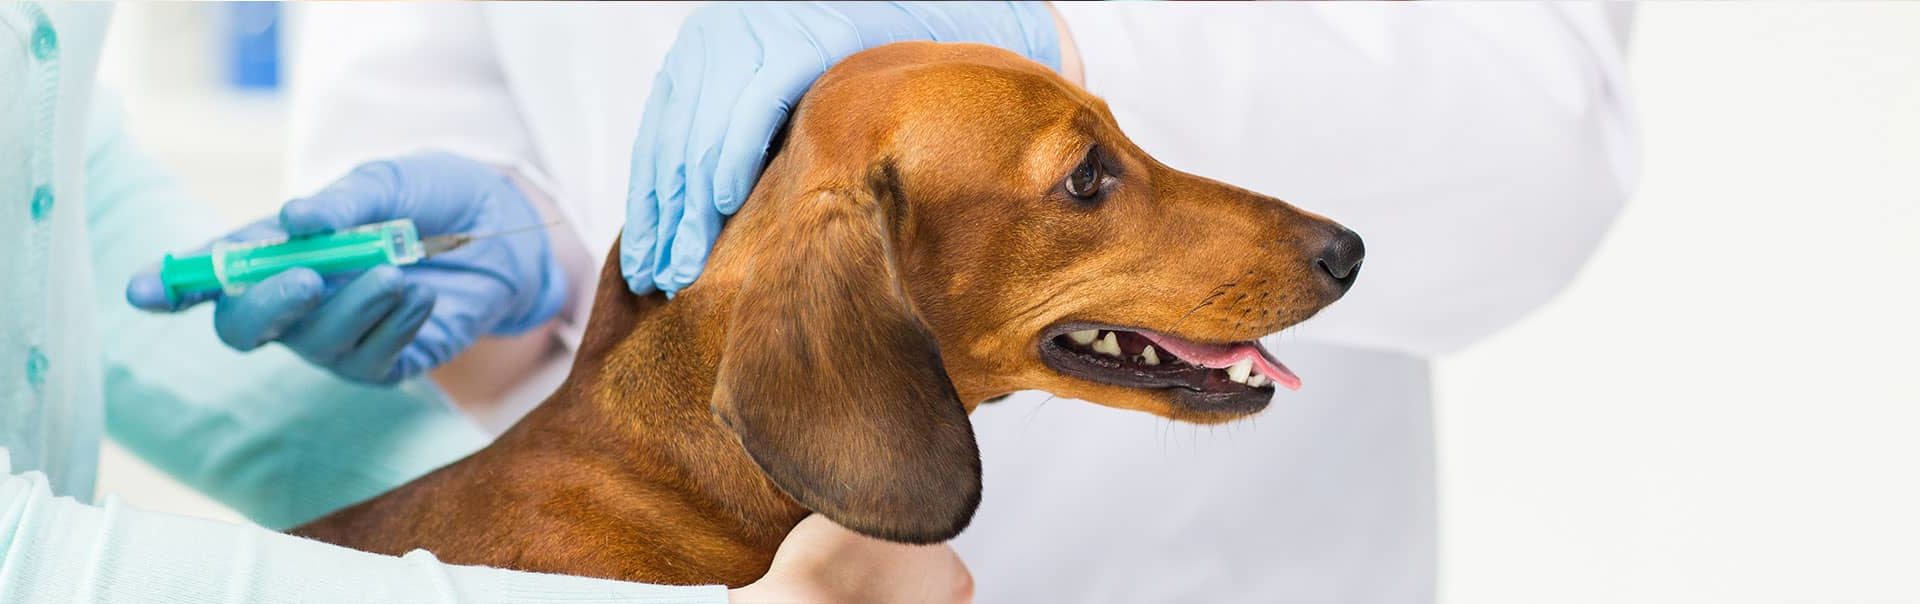 A dog receiving a vaccination shot